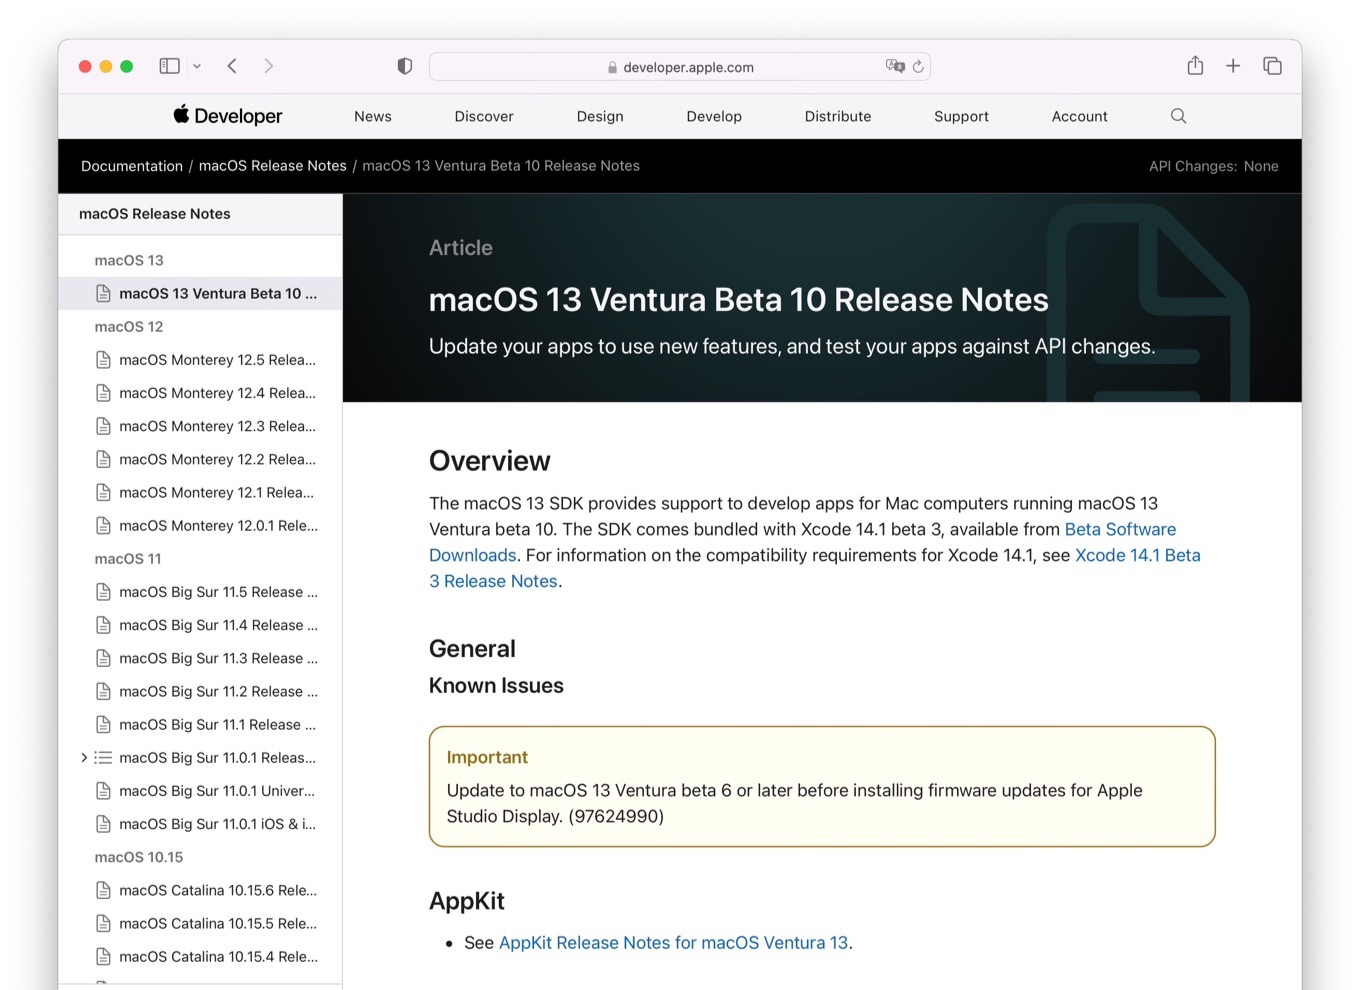 macOS 13 Ventura Beta 10 Release Notes